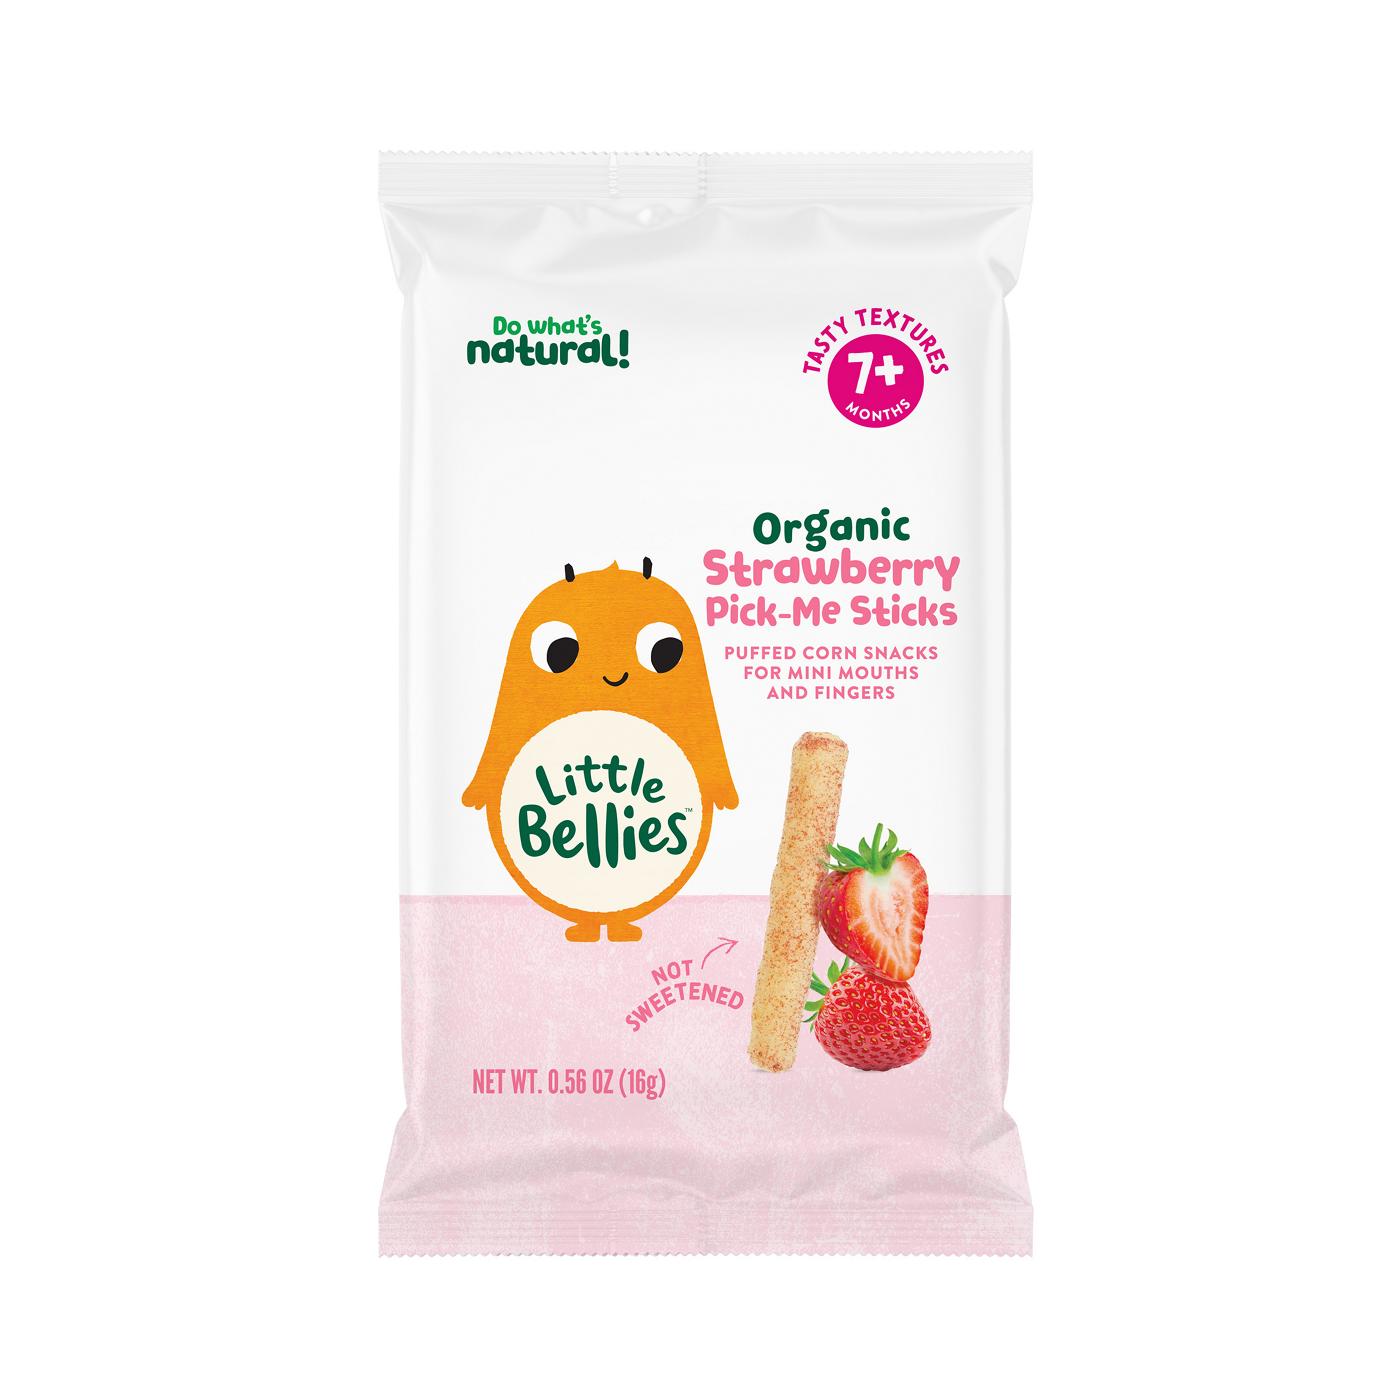 Little Bellies Organic Strawberry Pick-Me Sticks; image 1 of 2